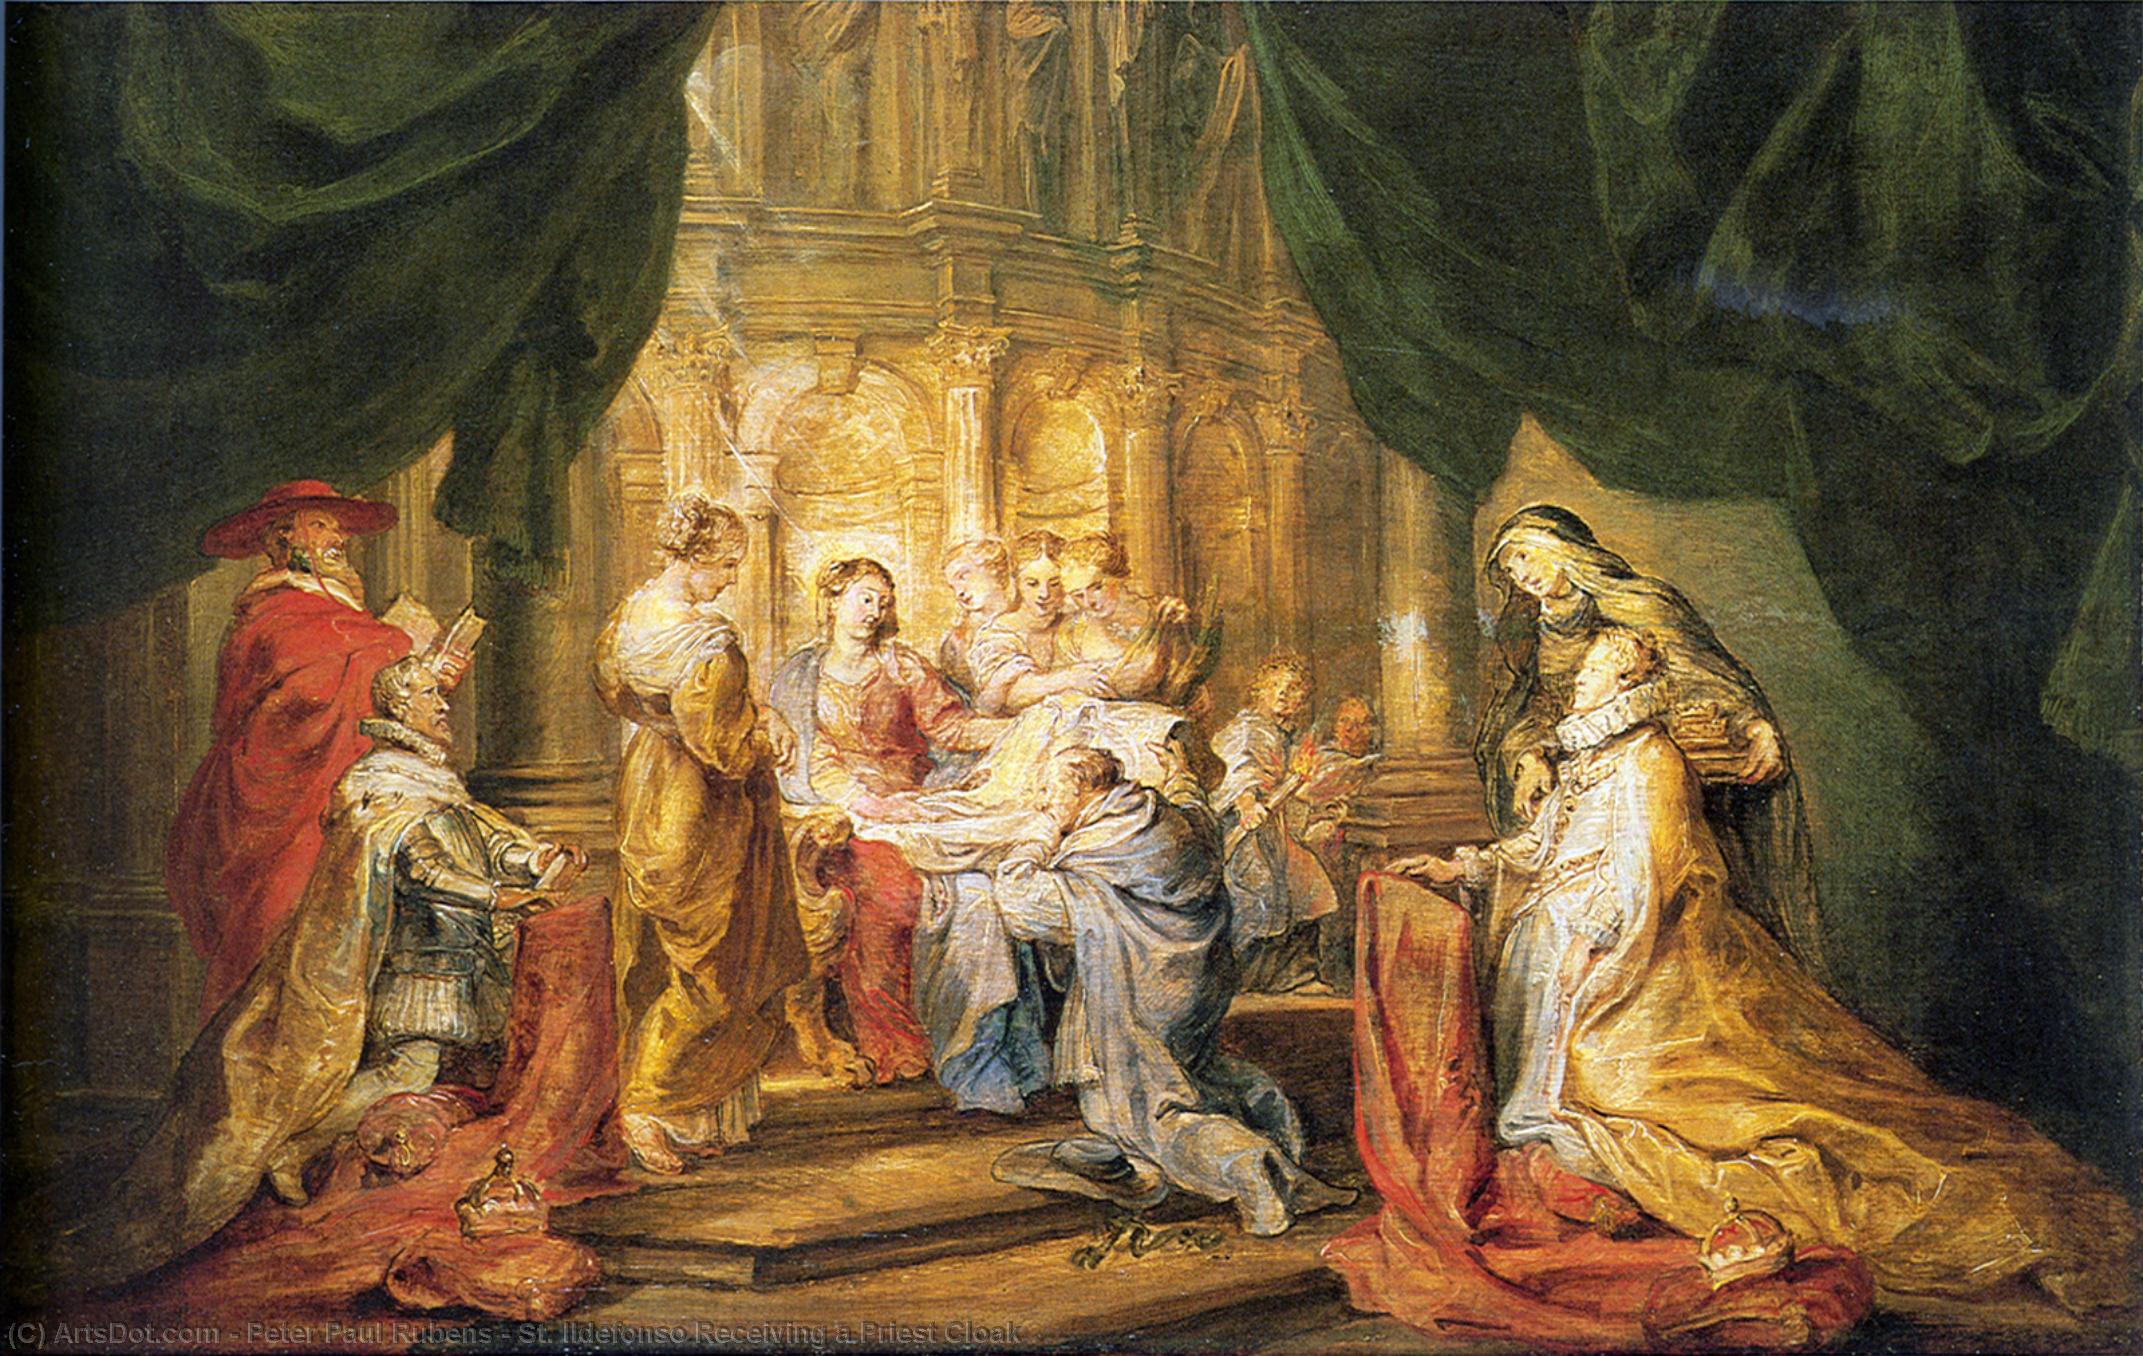 Wikioo.org - สารานุกรมวิจิตรศิลป์ - จิตรกรรม Peter Paul Rubens - St. Ildefonso Receiving a Priest Cloak